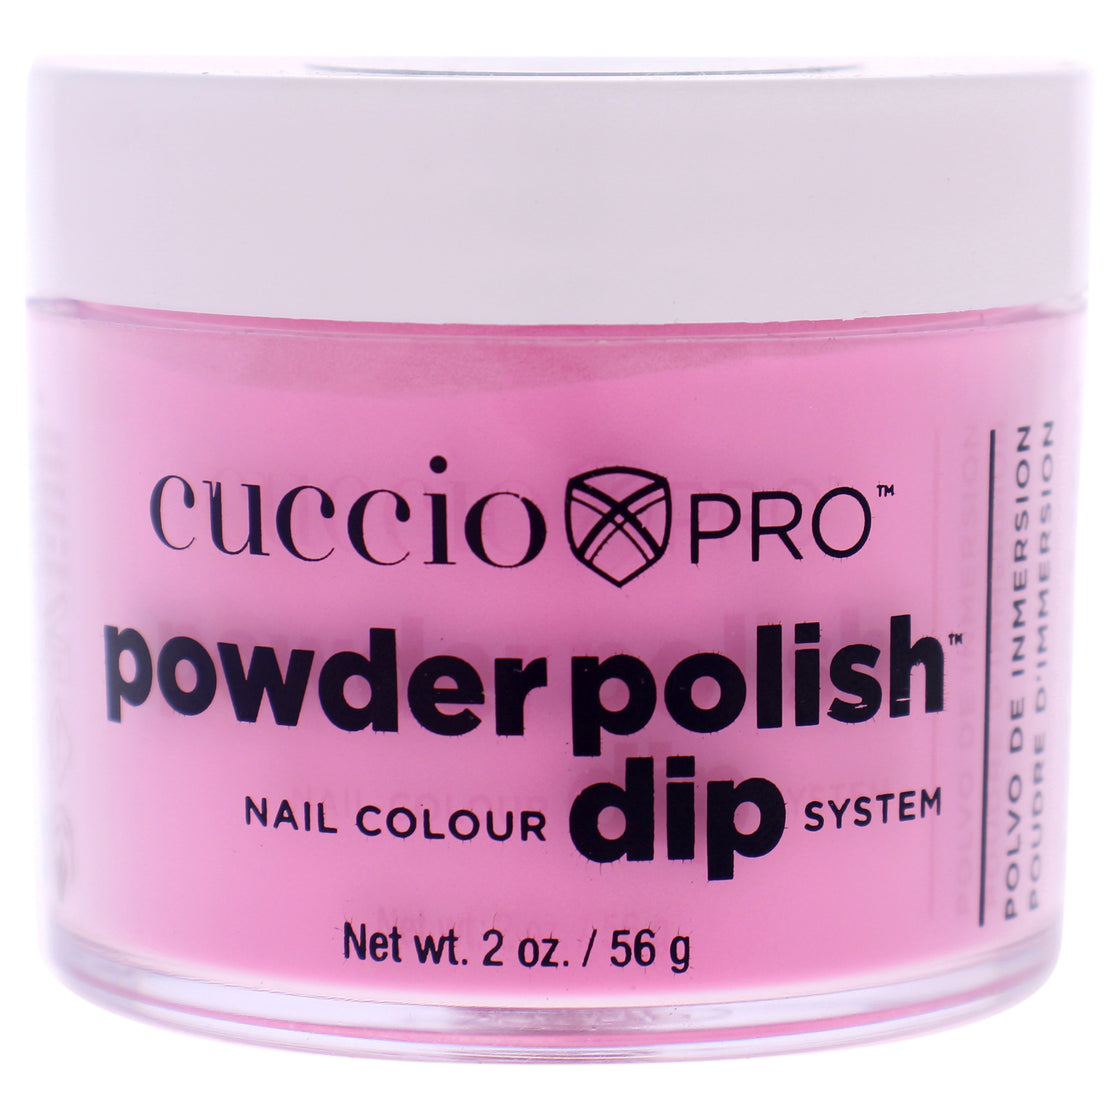 Pro Powder Polish Nail Colour Dip System - Bright Neon Pink by Cuccio Colour for Women - 1.6 oz Nail Powder